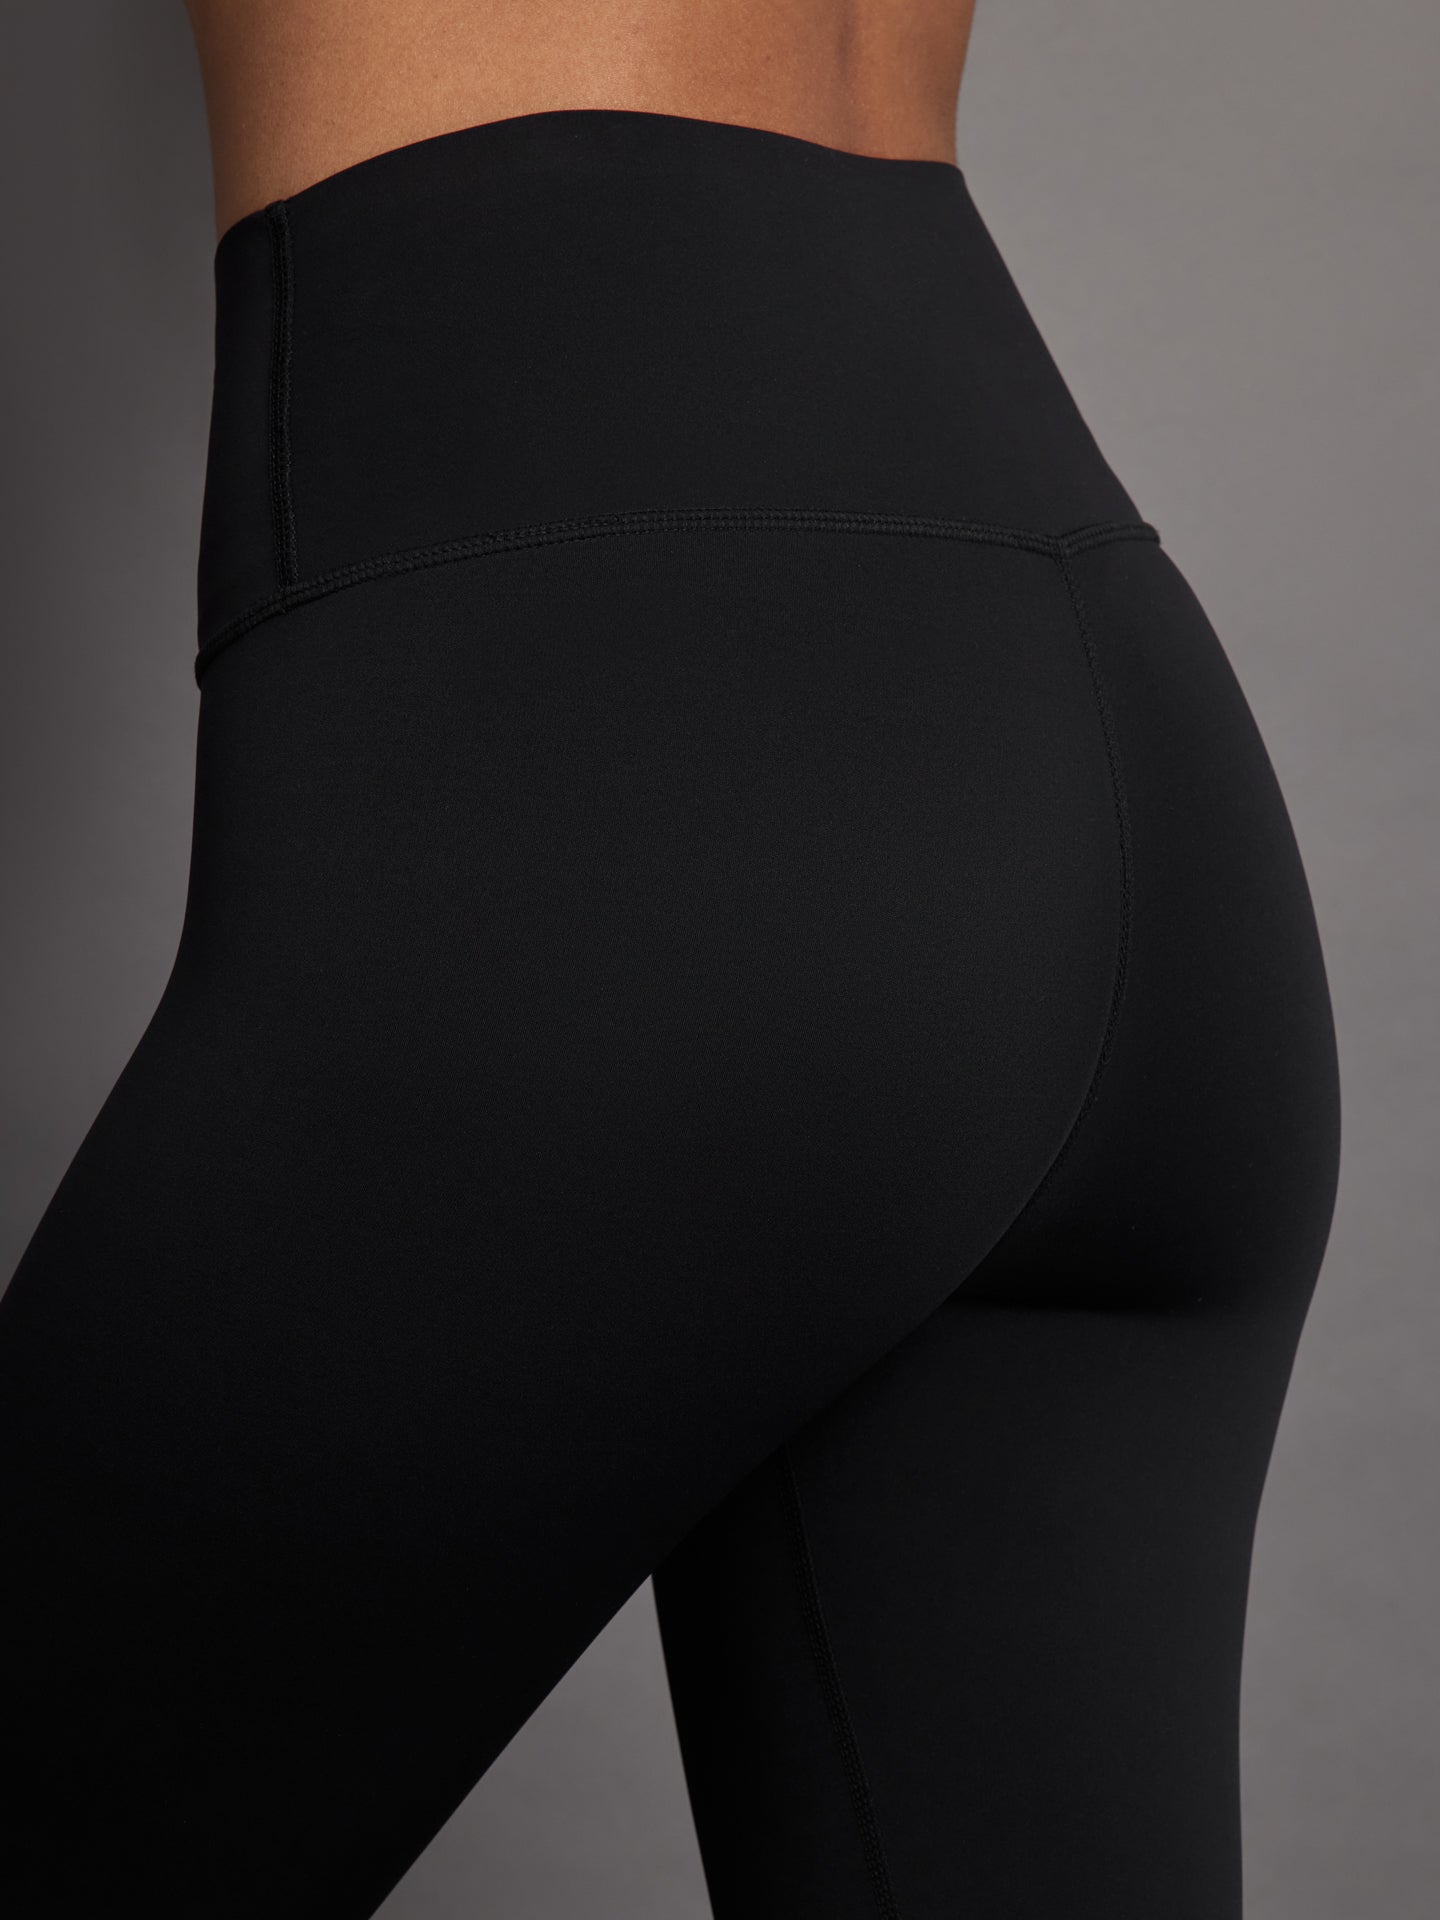 KILLER LEGS Women's Black Diamond Patterned Tights - Wholesale - Yelete.com